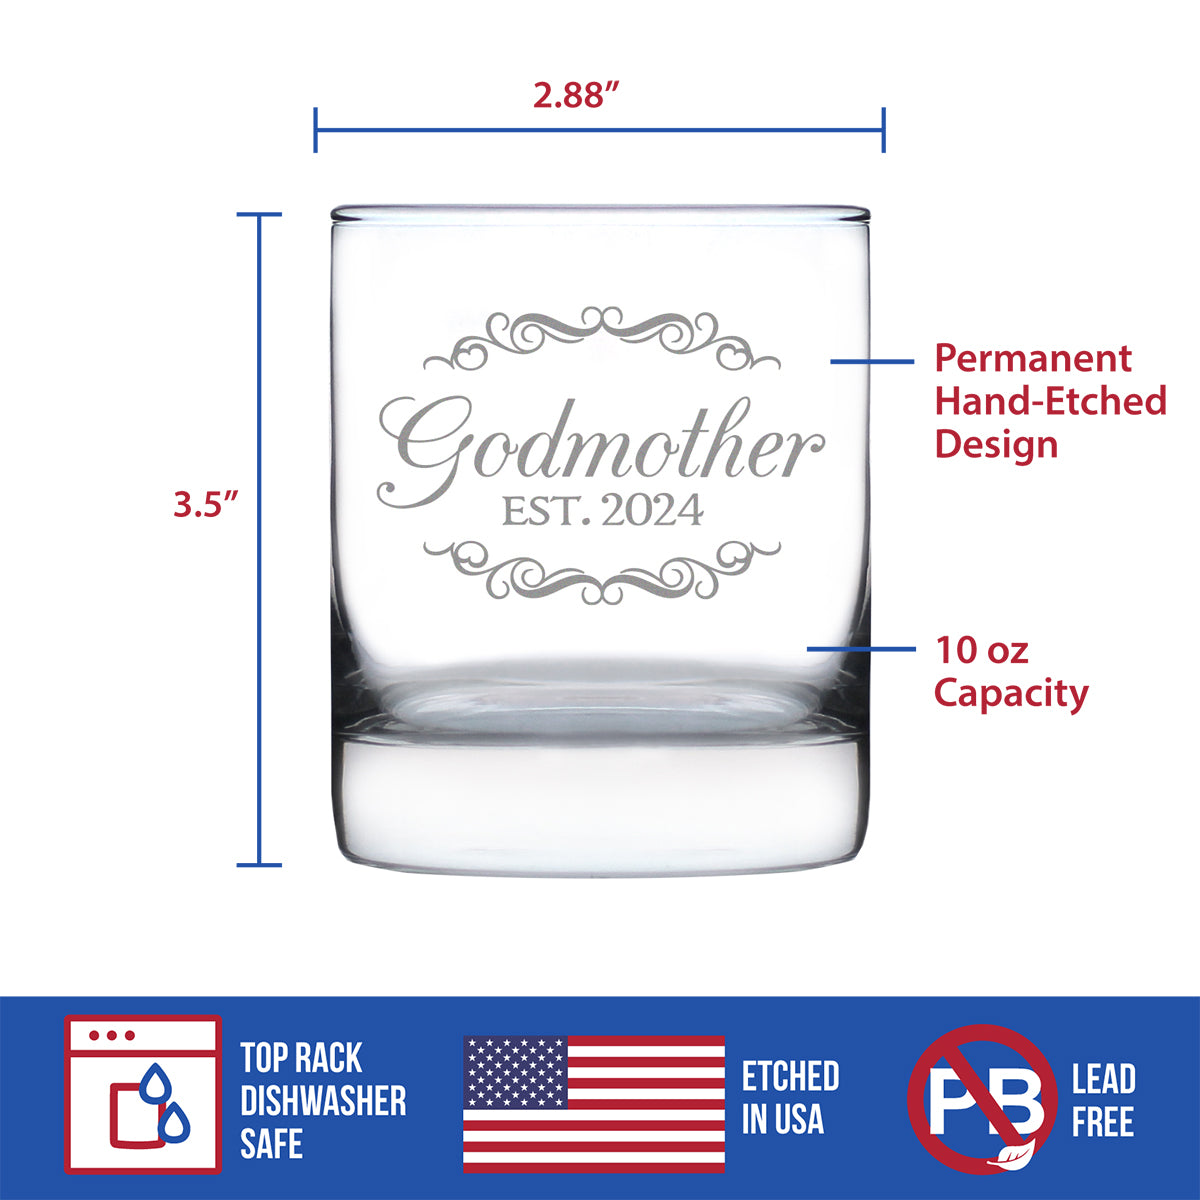 Godmother Est 2024 - New Godmother Whiskey Rocks Glass Proposal Gift for First Time Godparents - Decorative 10.25 Oz Glasses